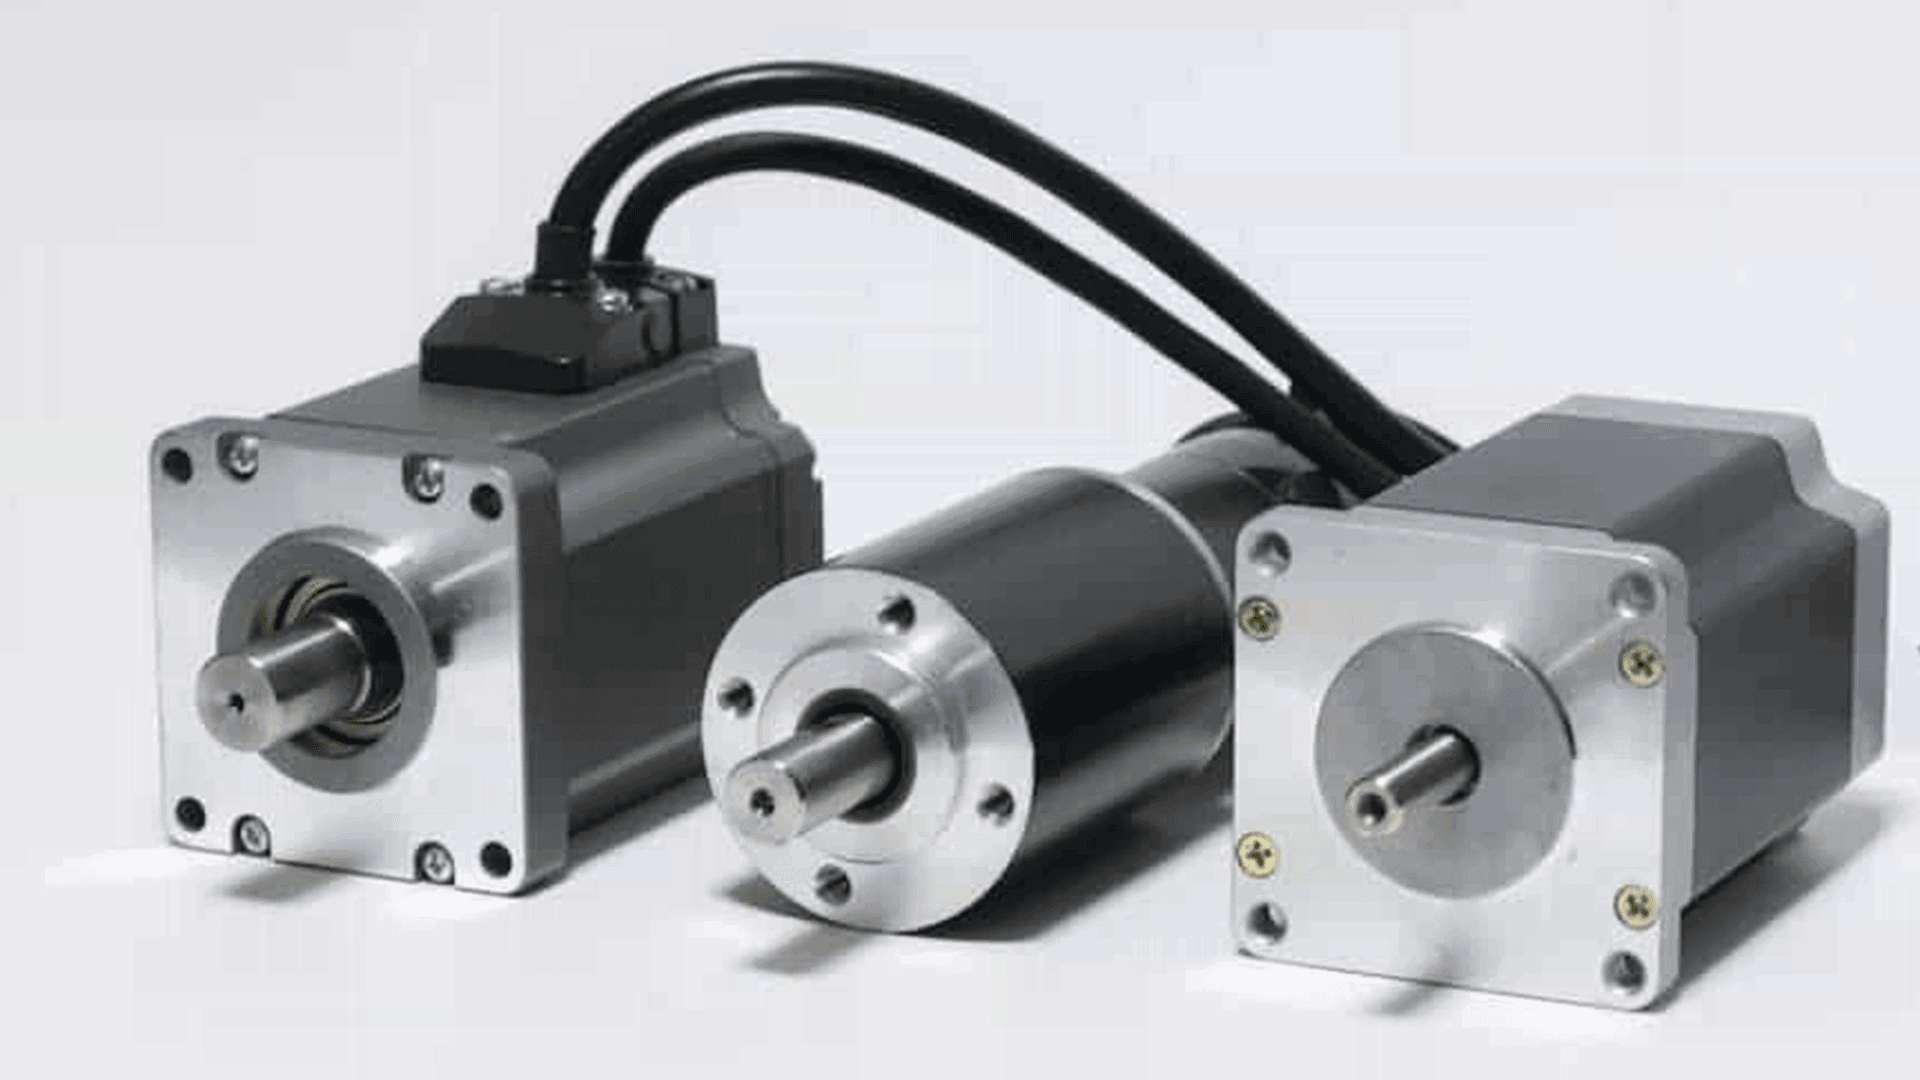 Orphan Nordamerika justere DC motors advantages and disadvantages over AC motors - everythingMRO